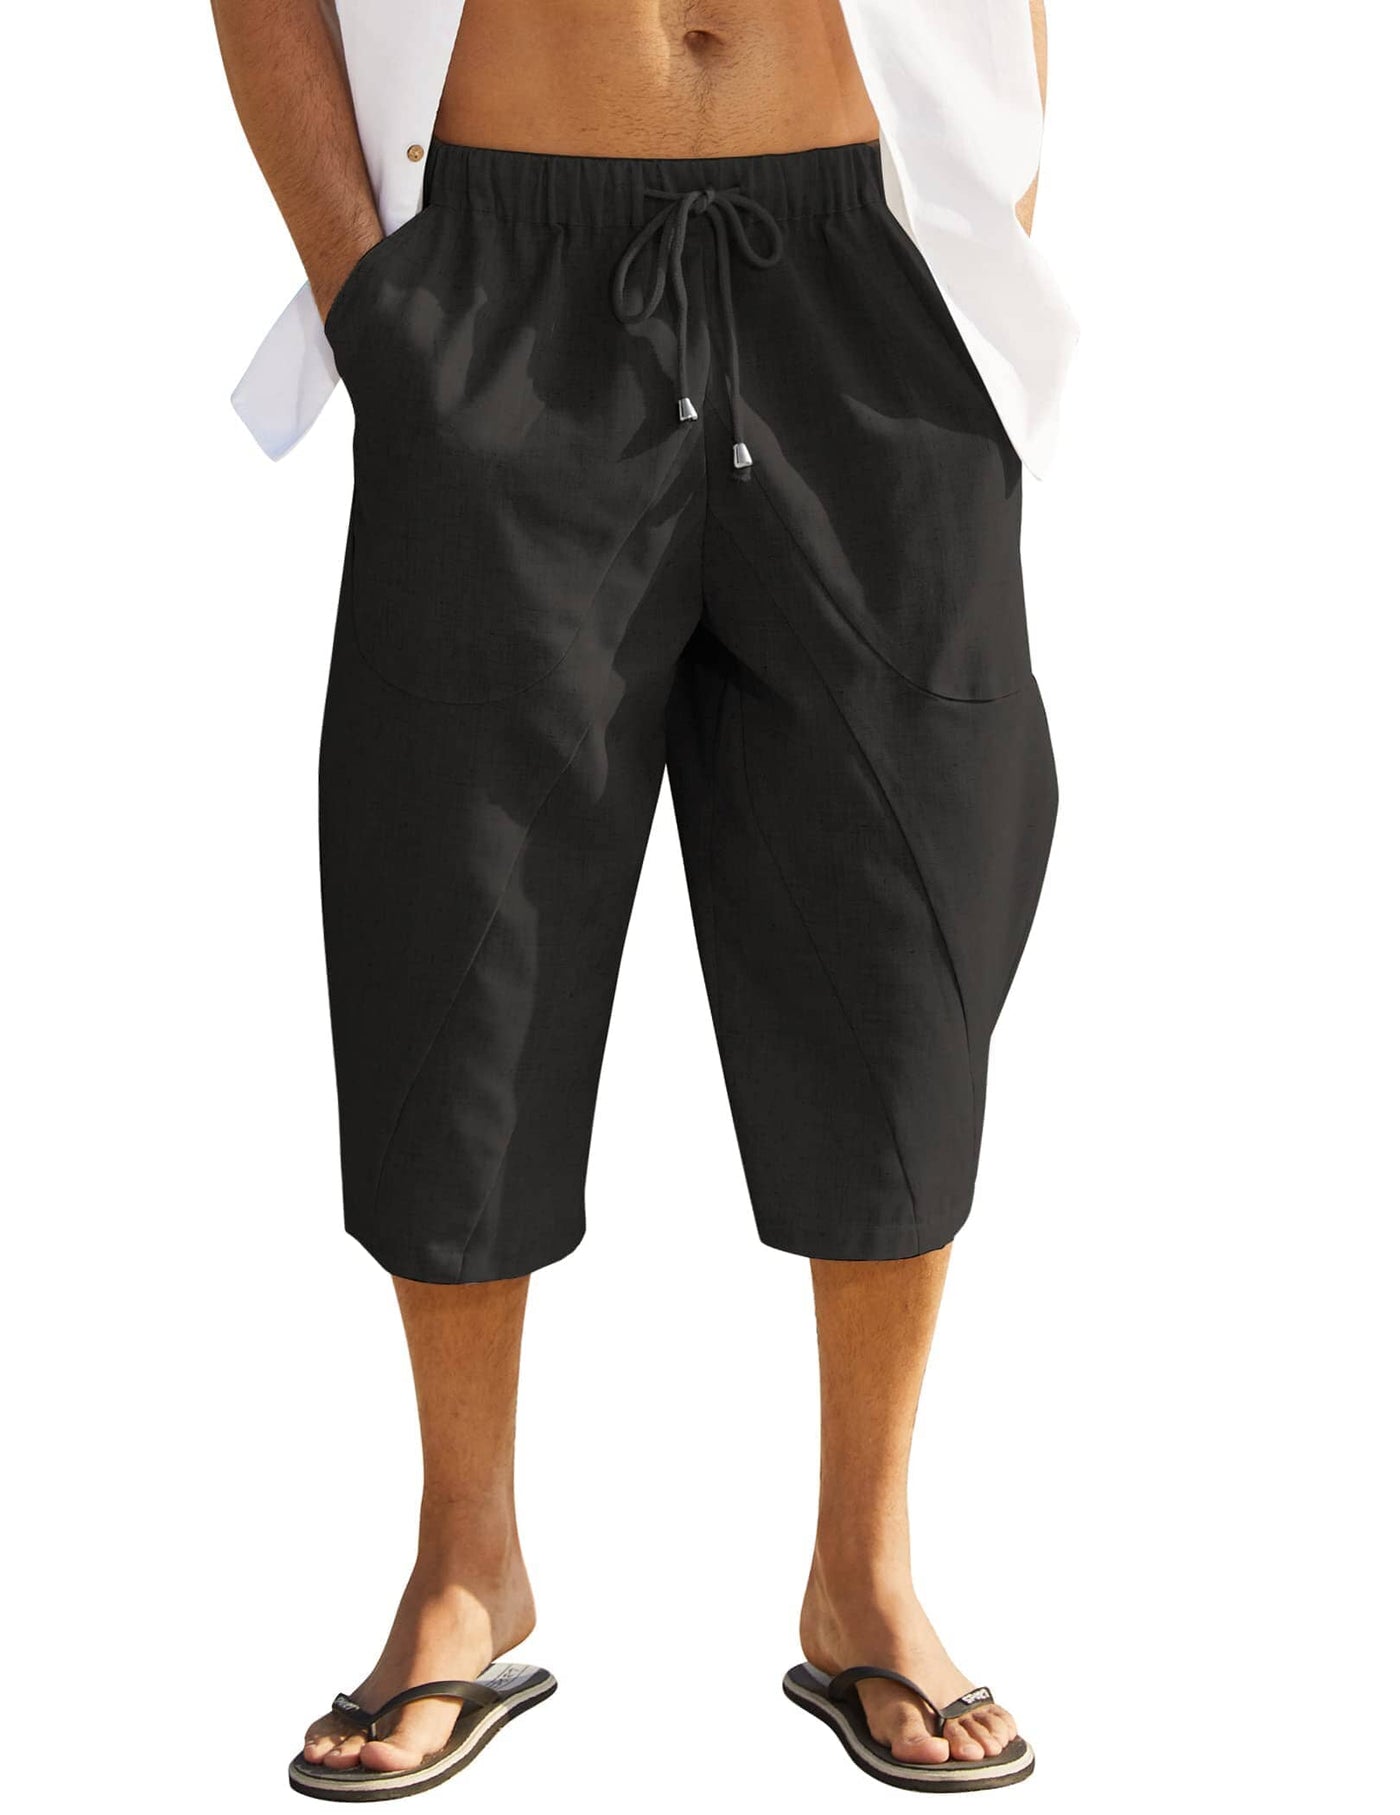 Coofandy Cotton Style Yoga Beach Pants (US Only) Pants coofandy Black S 